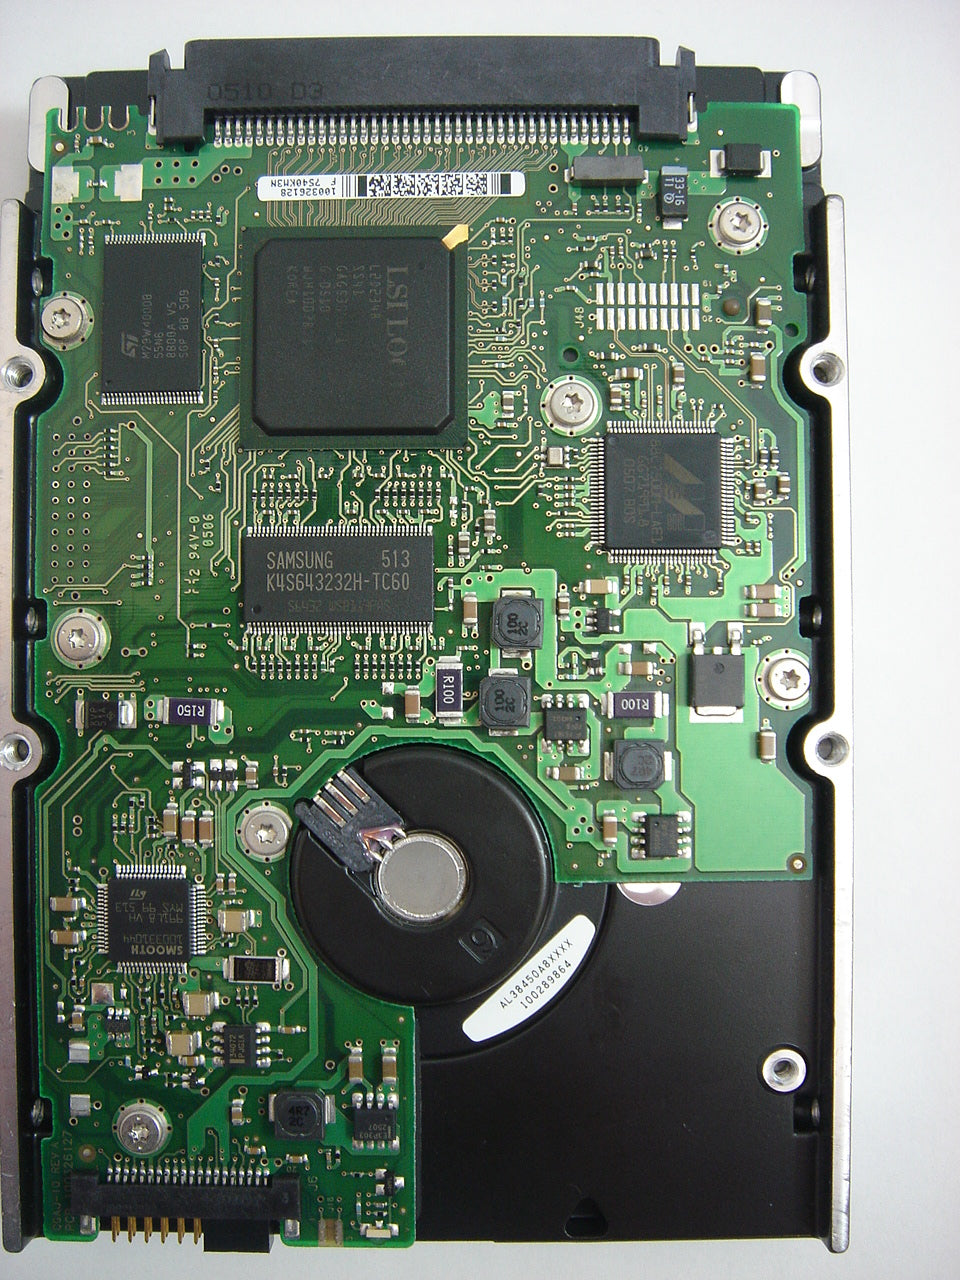 PR04190_9BB006-104_Seagate 36GB SCSI 80 Pin 10Krpm 3.5in HDD - Image2